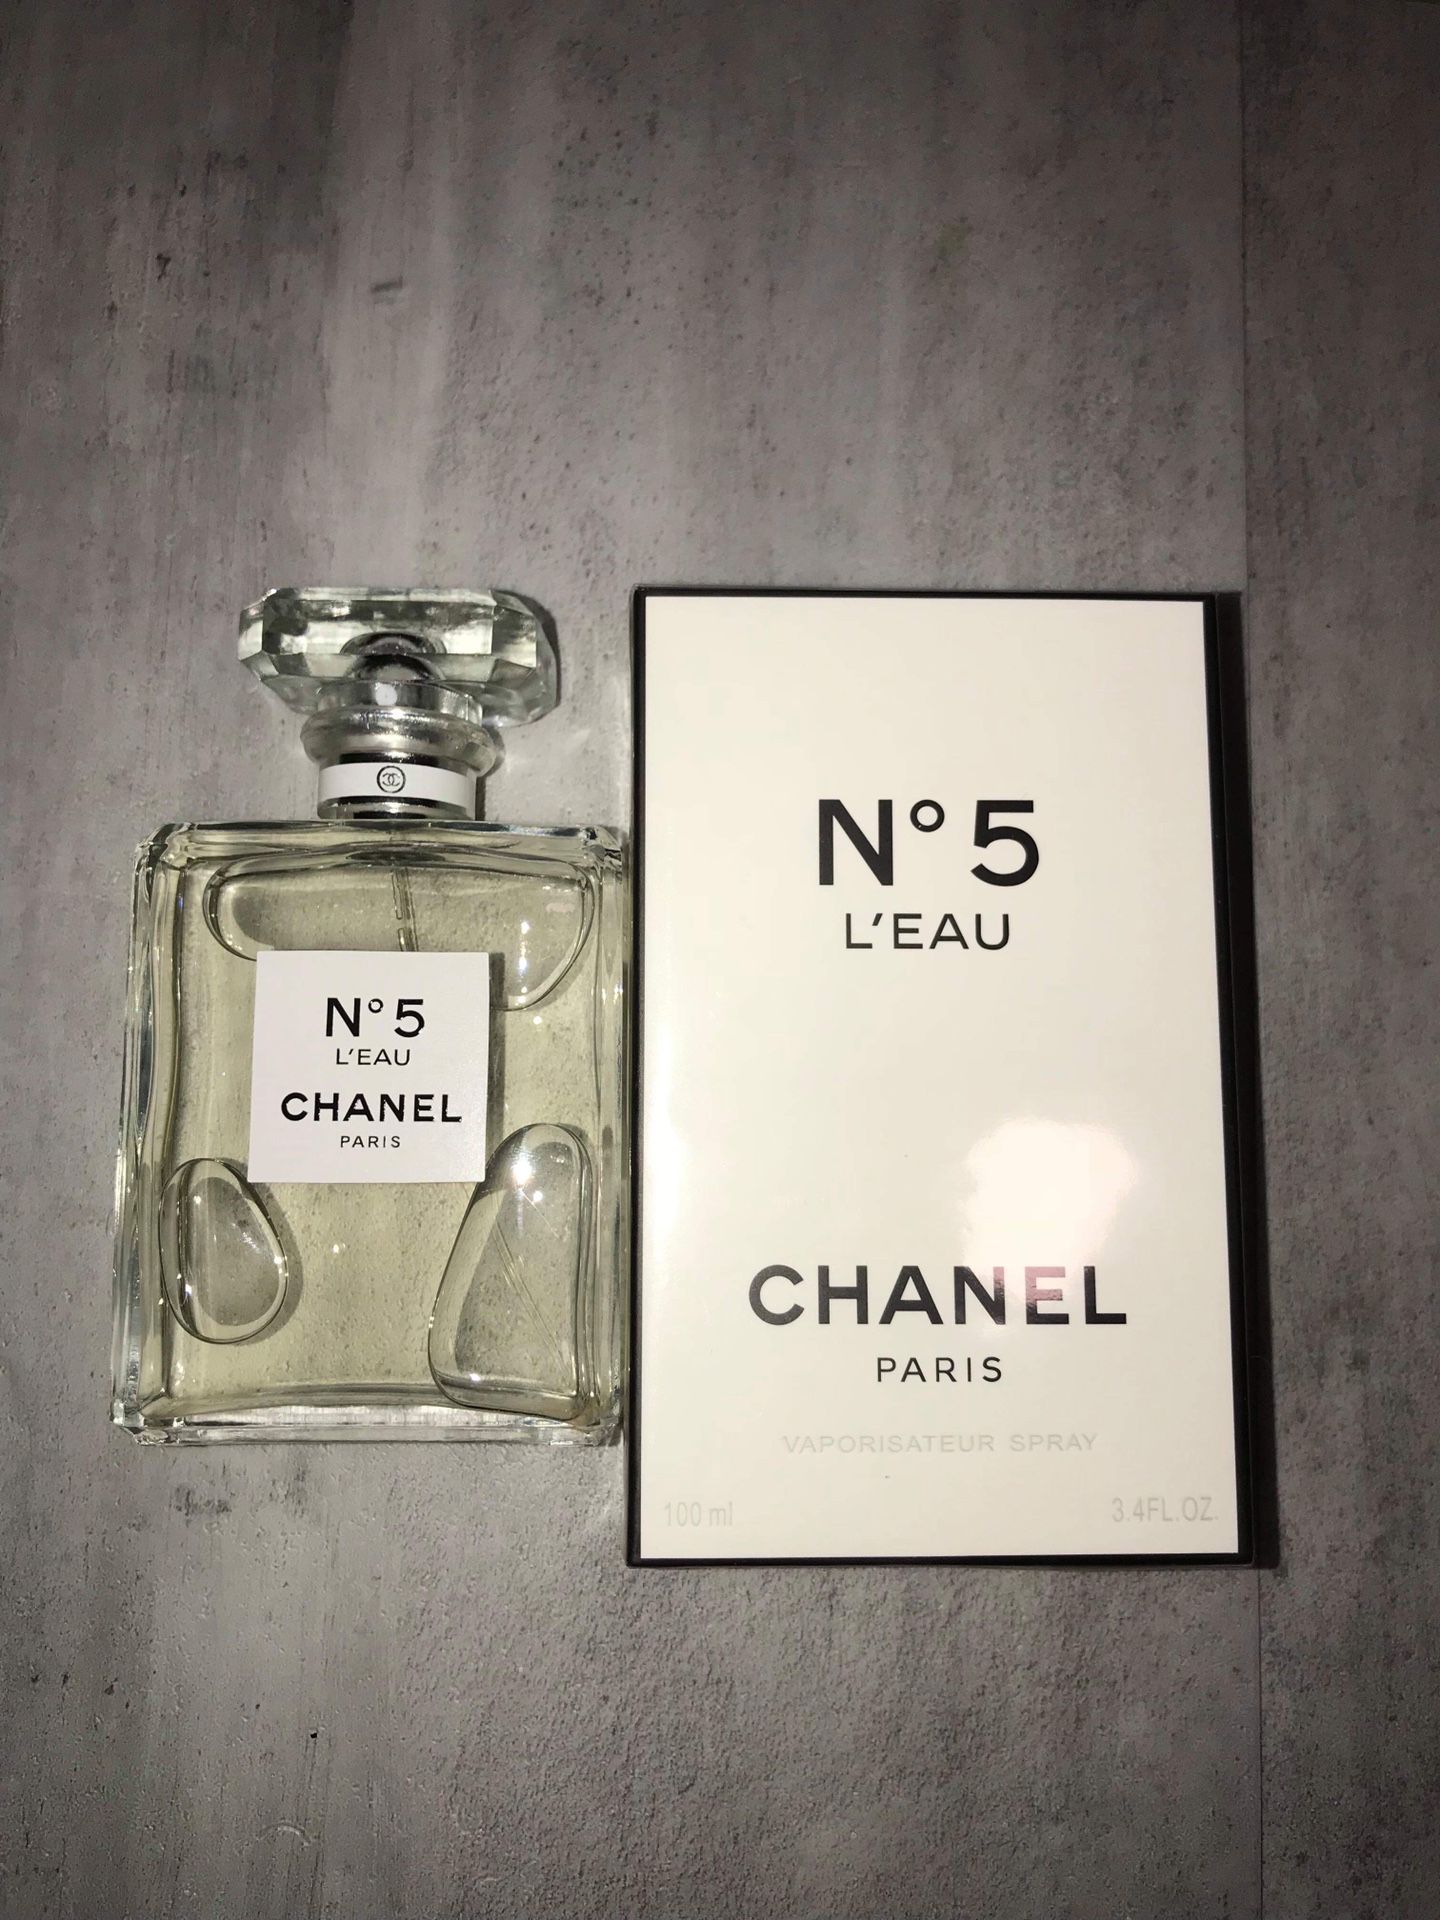 No5 chanel perfume